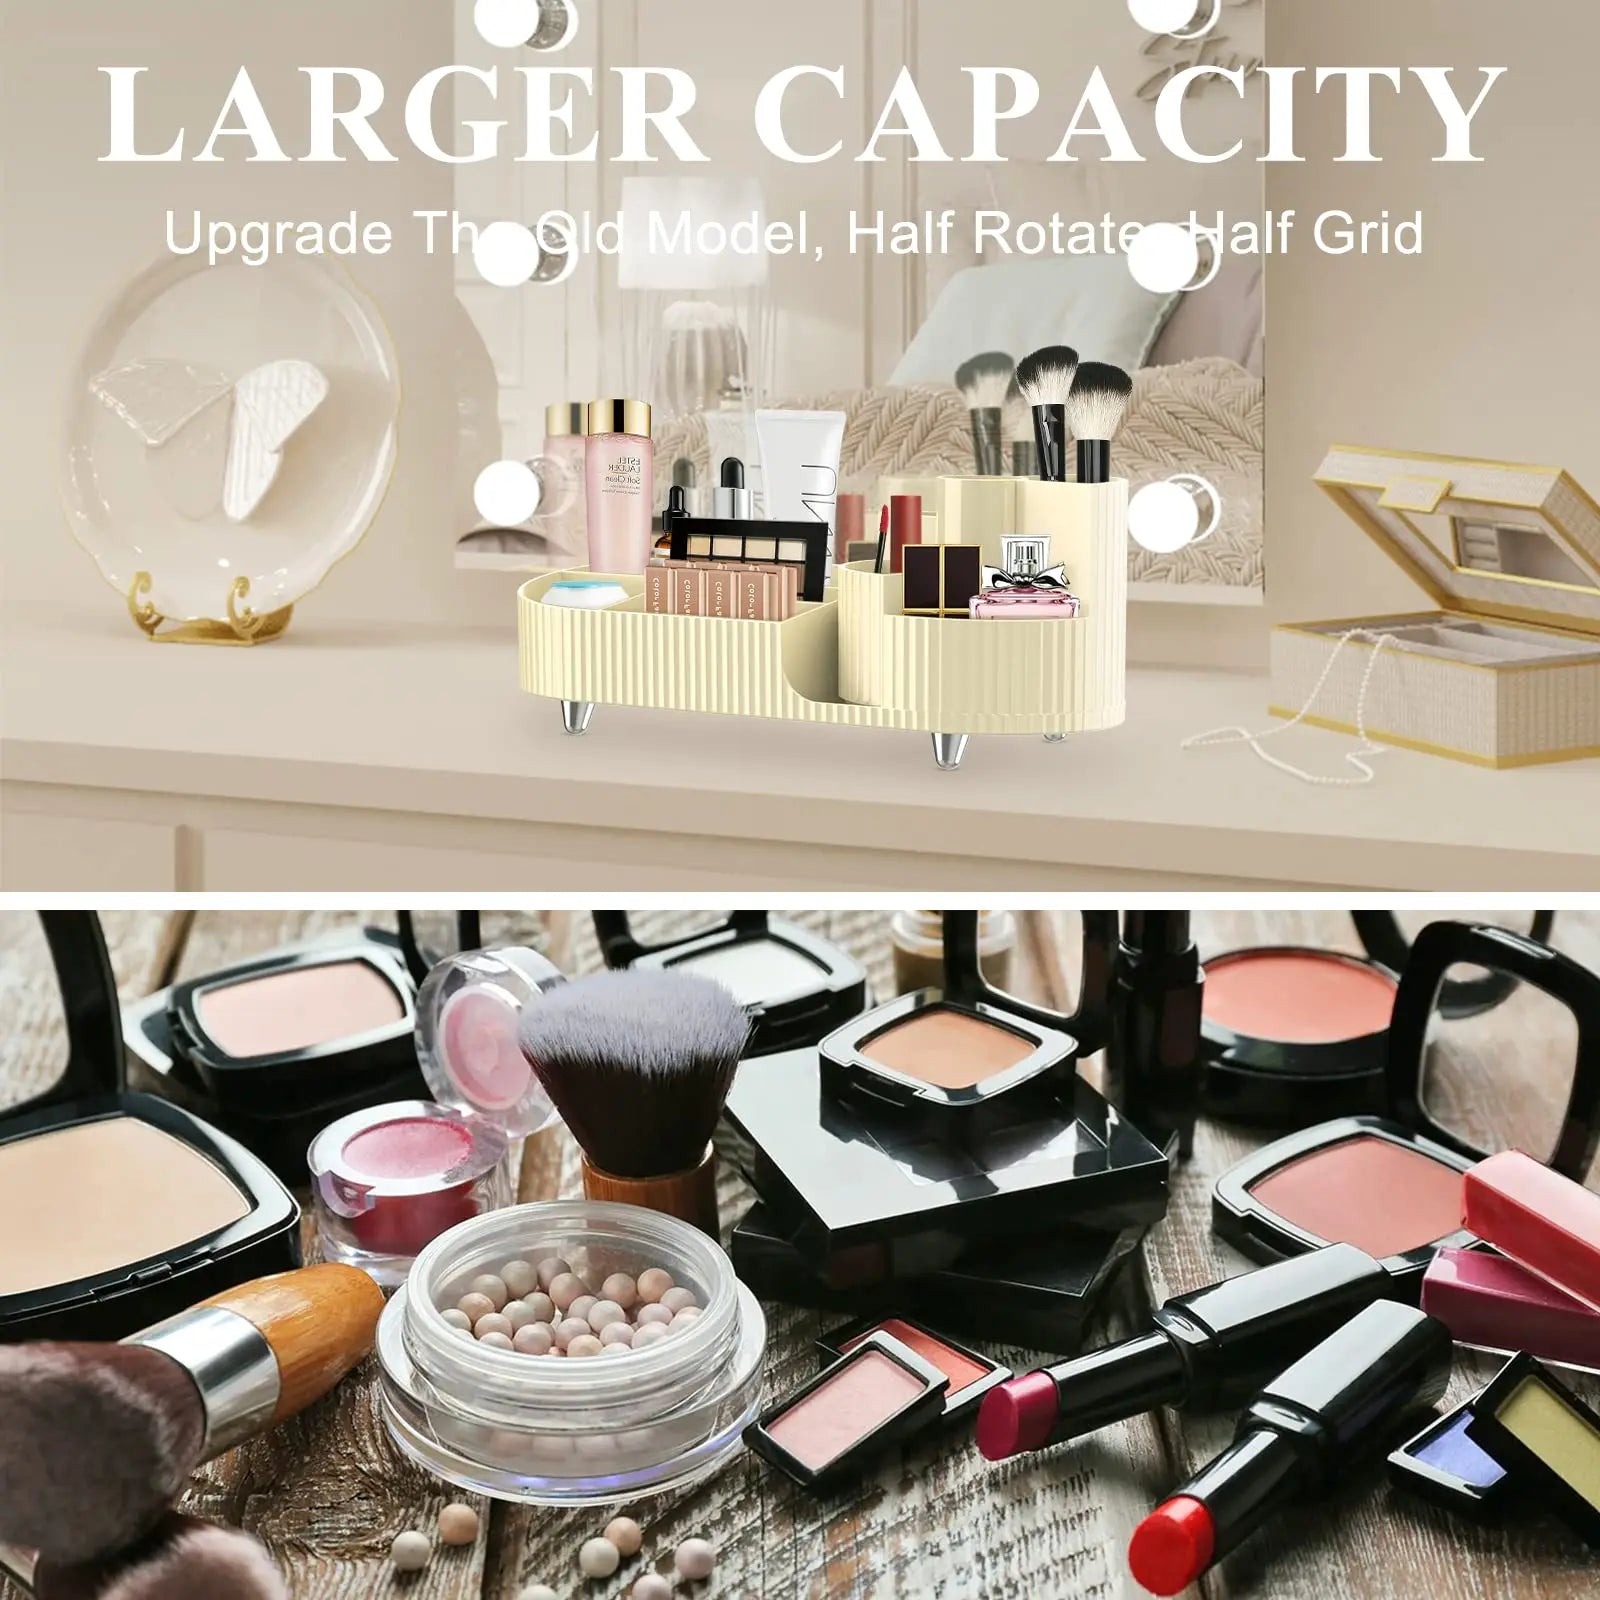 360° Rotating Makeup Organizer - Large Capacity Brush Holder for Vanity Decor, Bathroom Countertops, Desk Storage Container